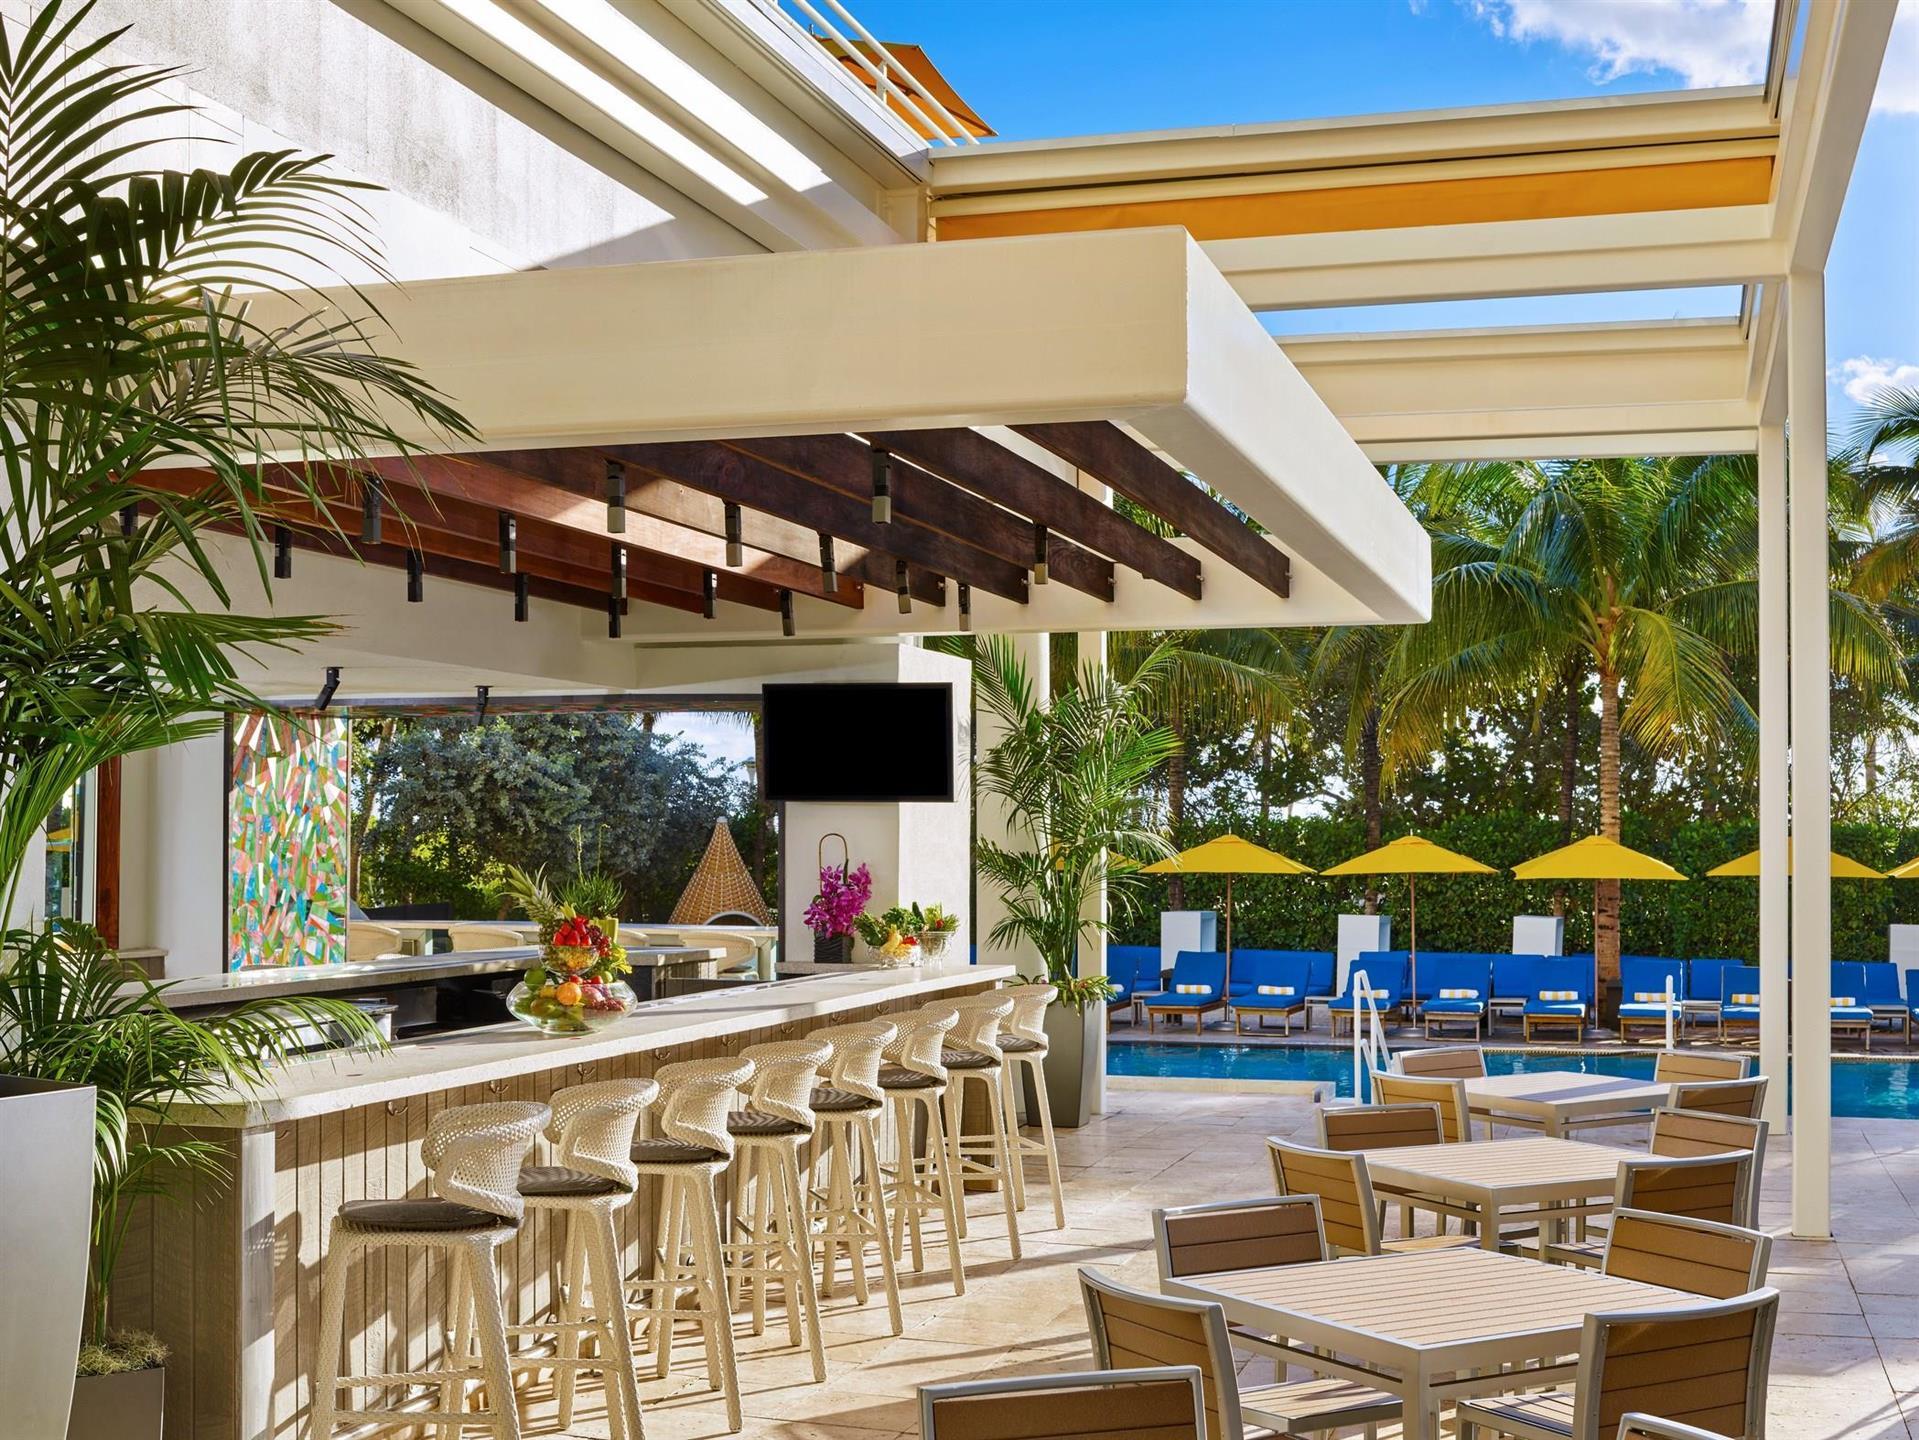 Royal Palm South Beach Miami, a Tribute Portfolio Resort in Miami Beach, FL